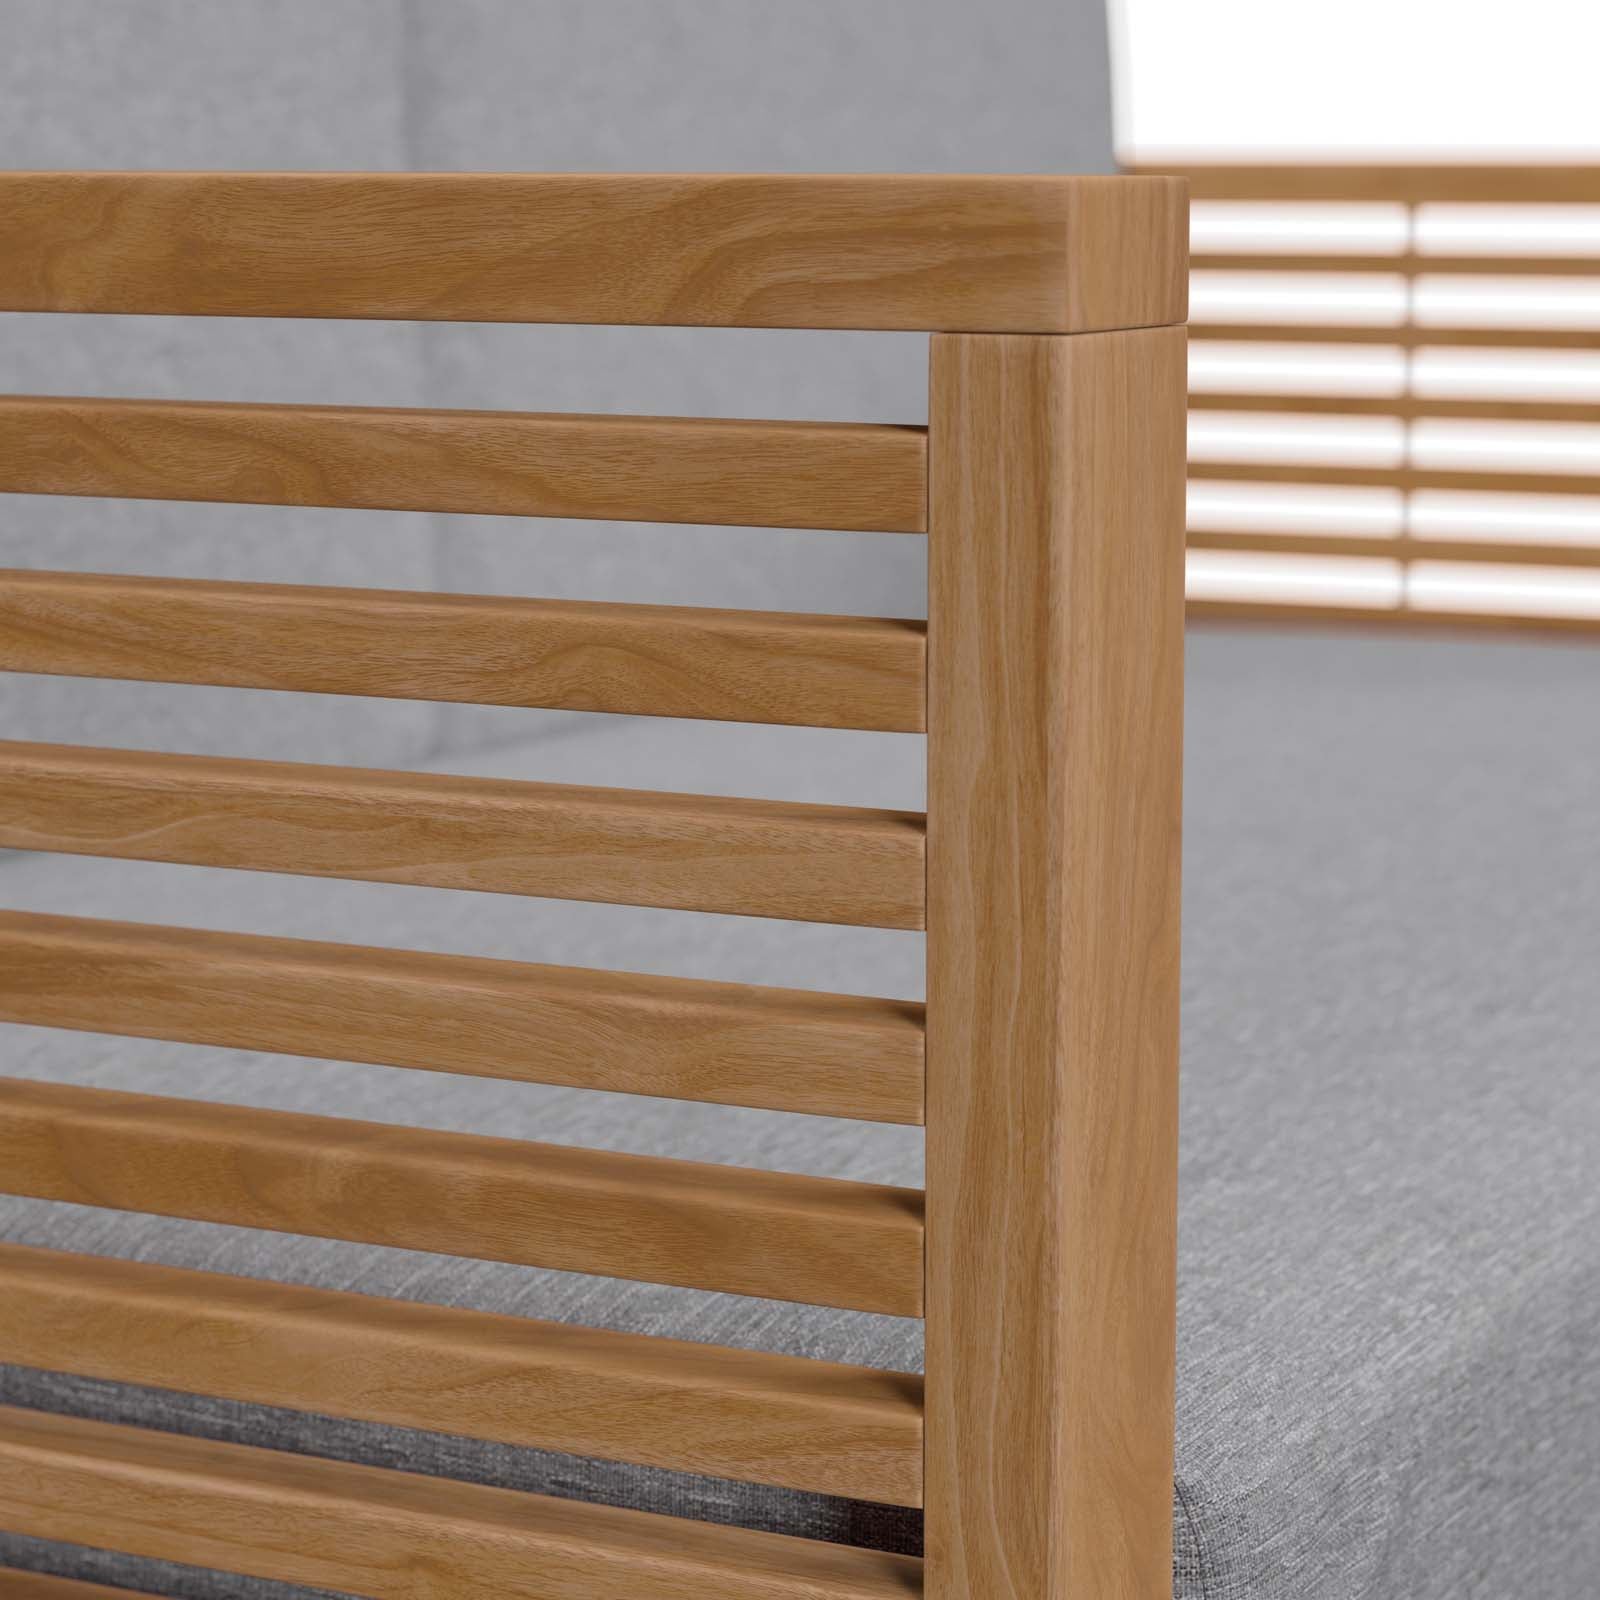 Carlsbad 3-Piece Teak Wood Outdoor Patio Set-Outdoor Set-Modway-Wall2Wall Furnishings